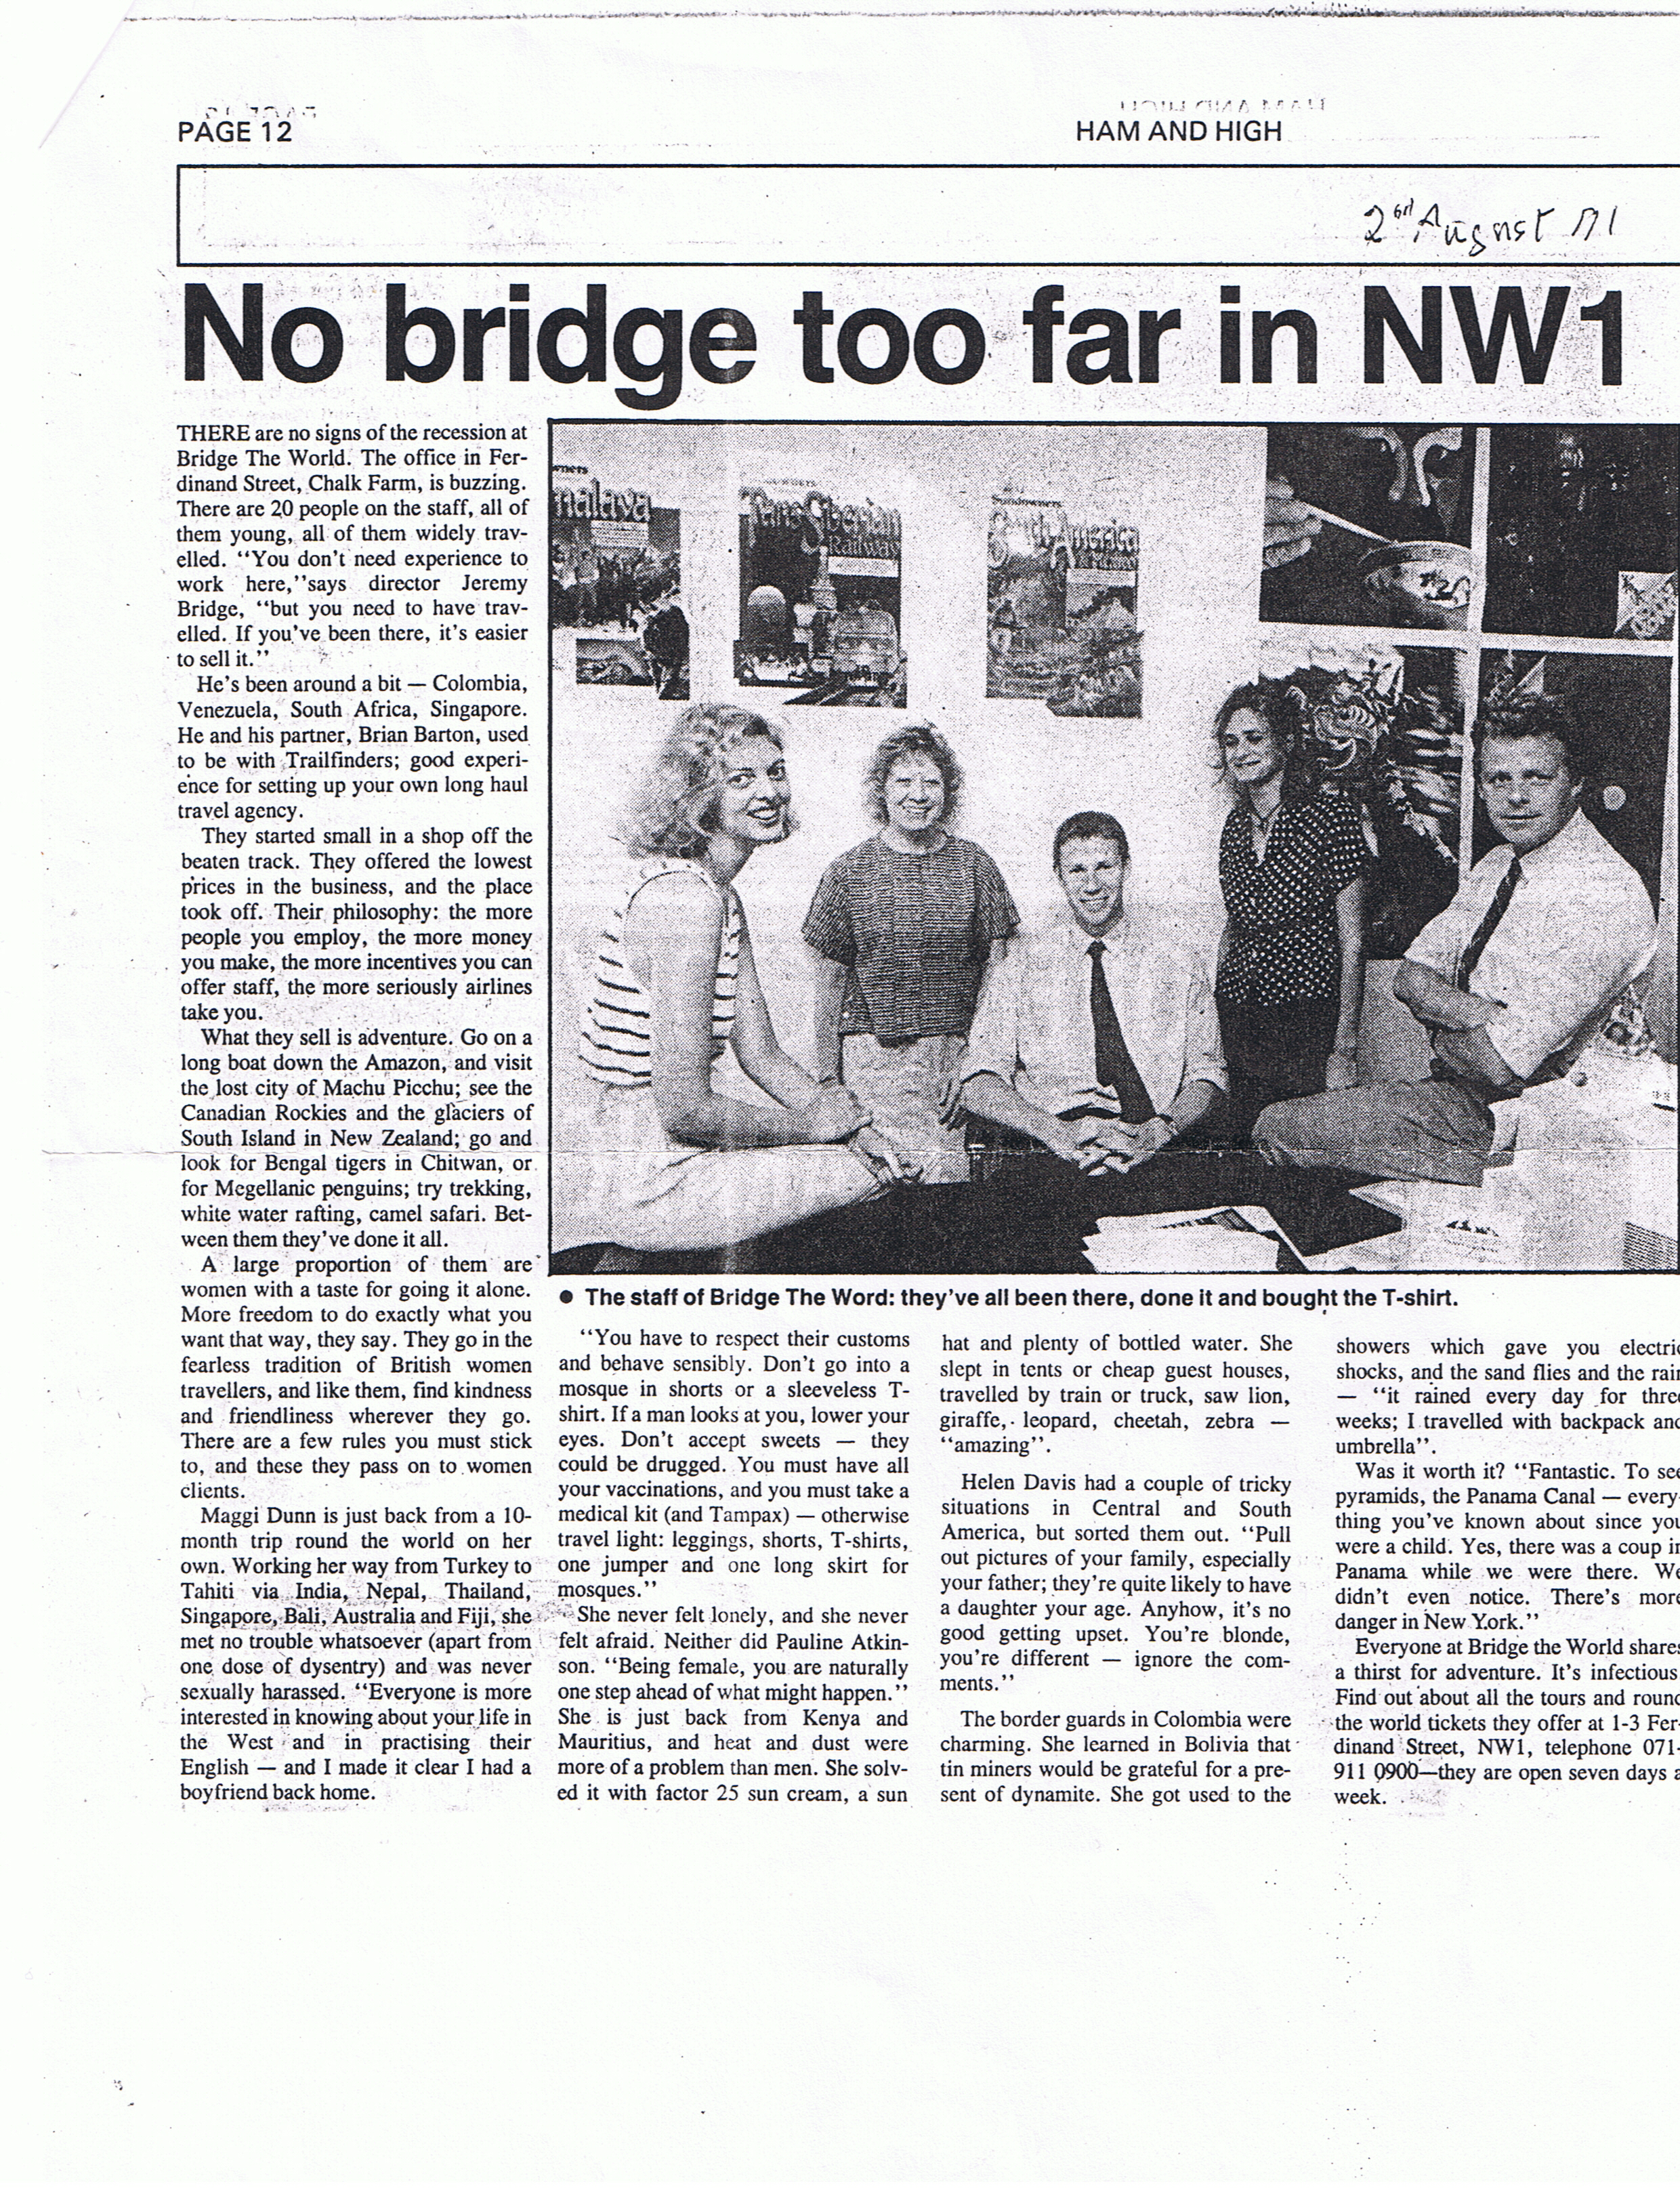 bridge-travel-news